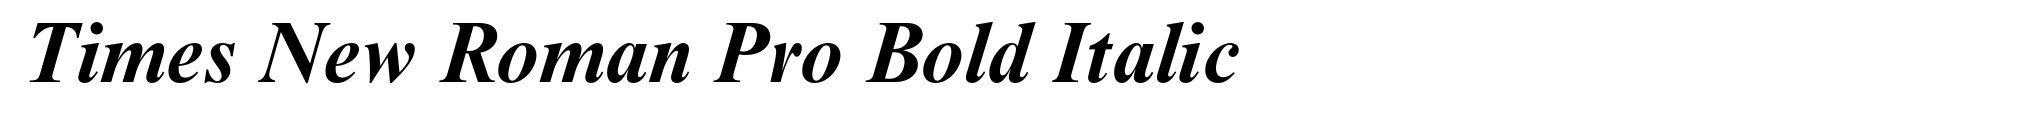 Times New Roman Pro Bold Italic image